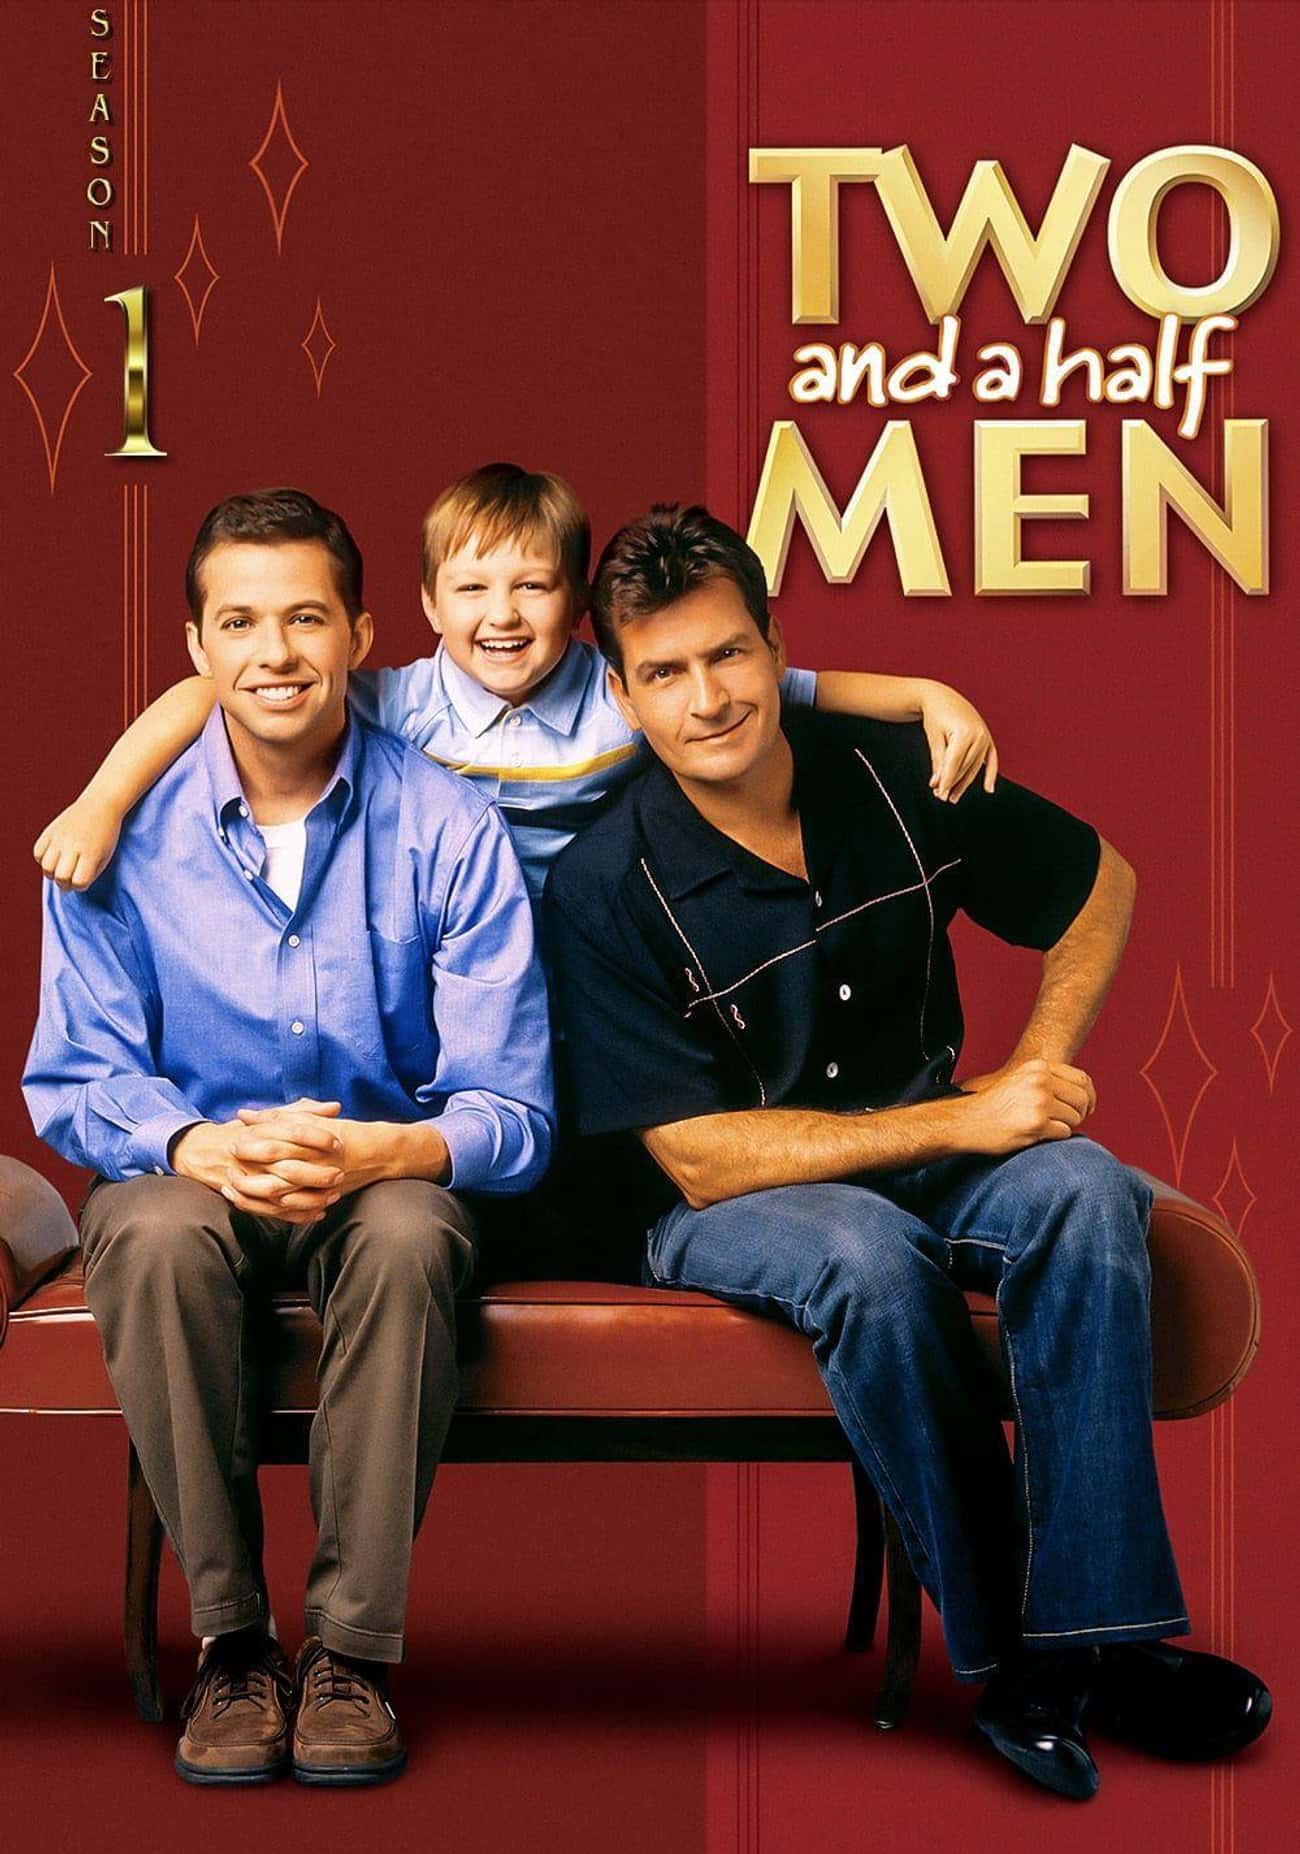 Two and a Half Men - Season 1